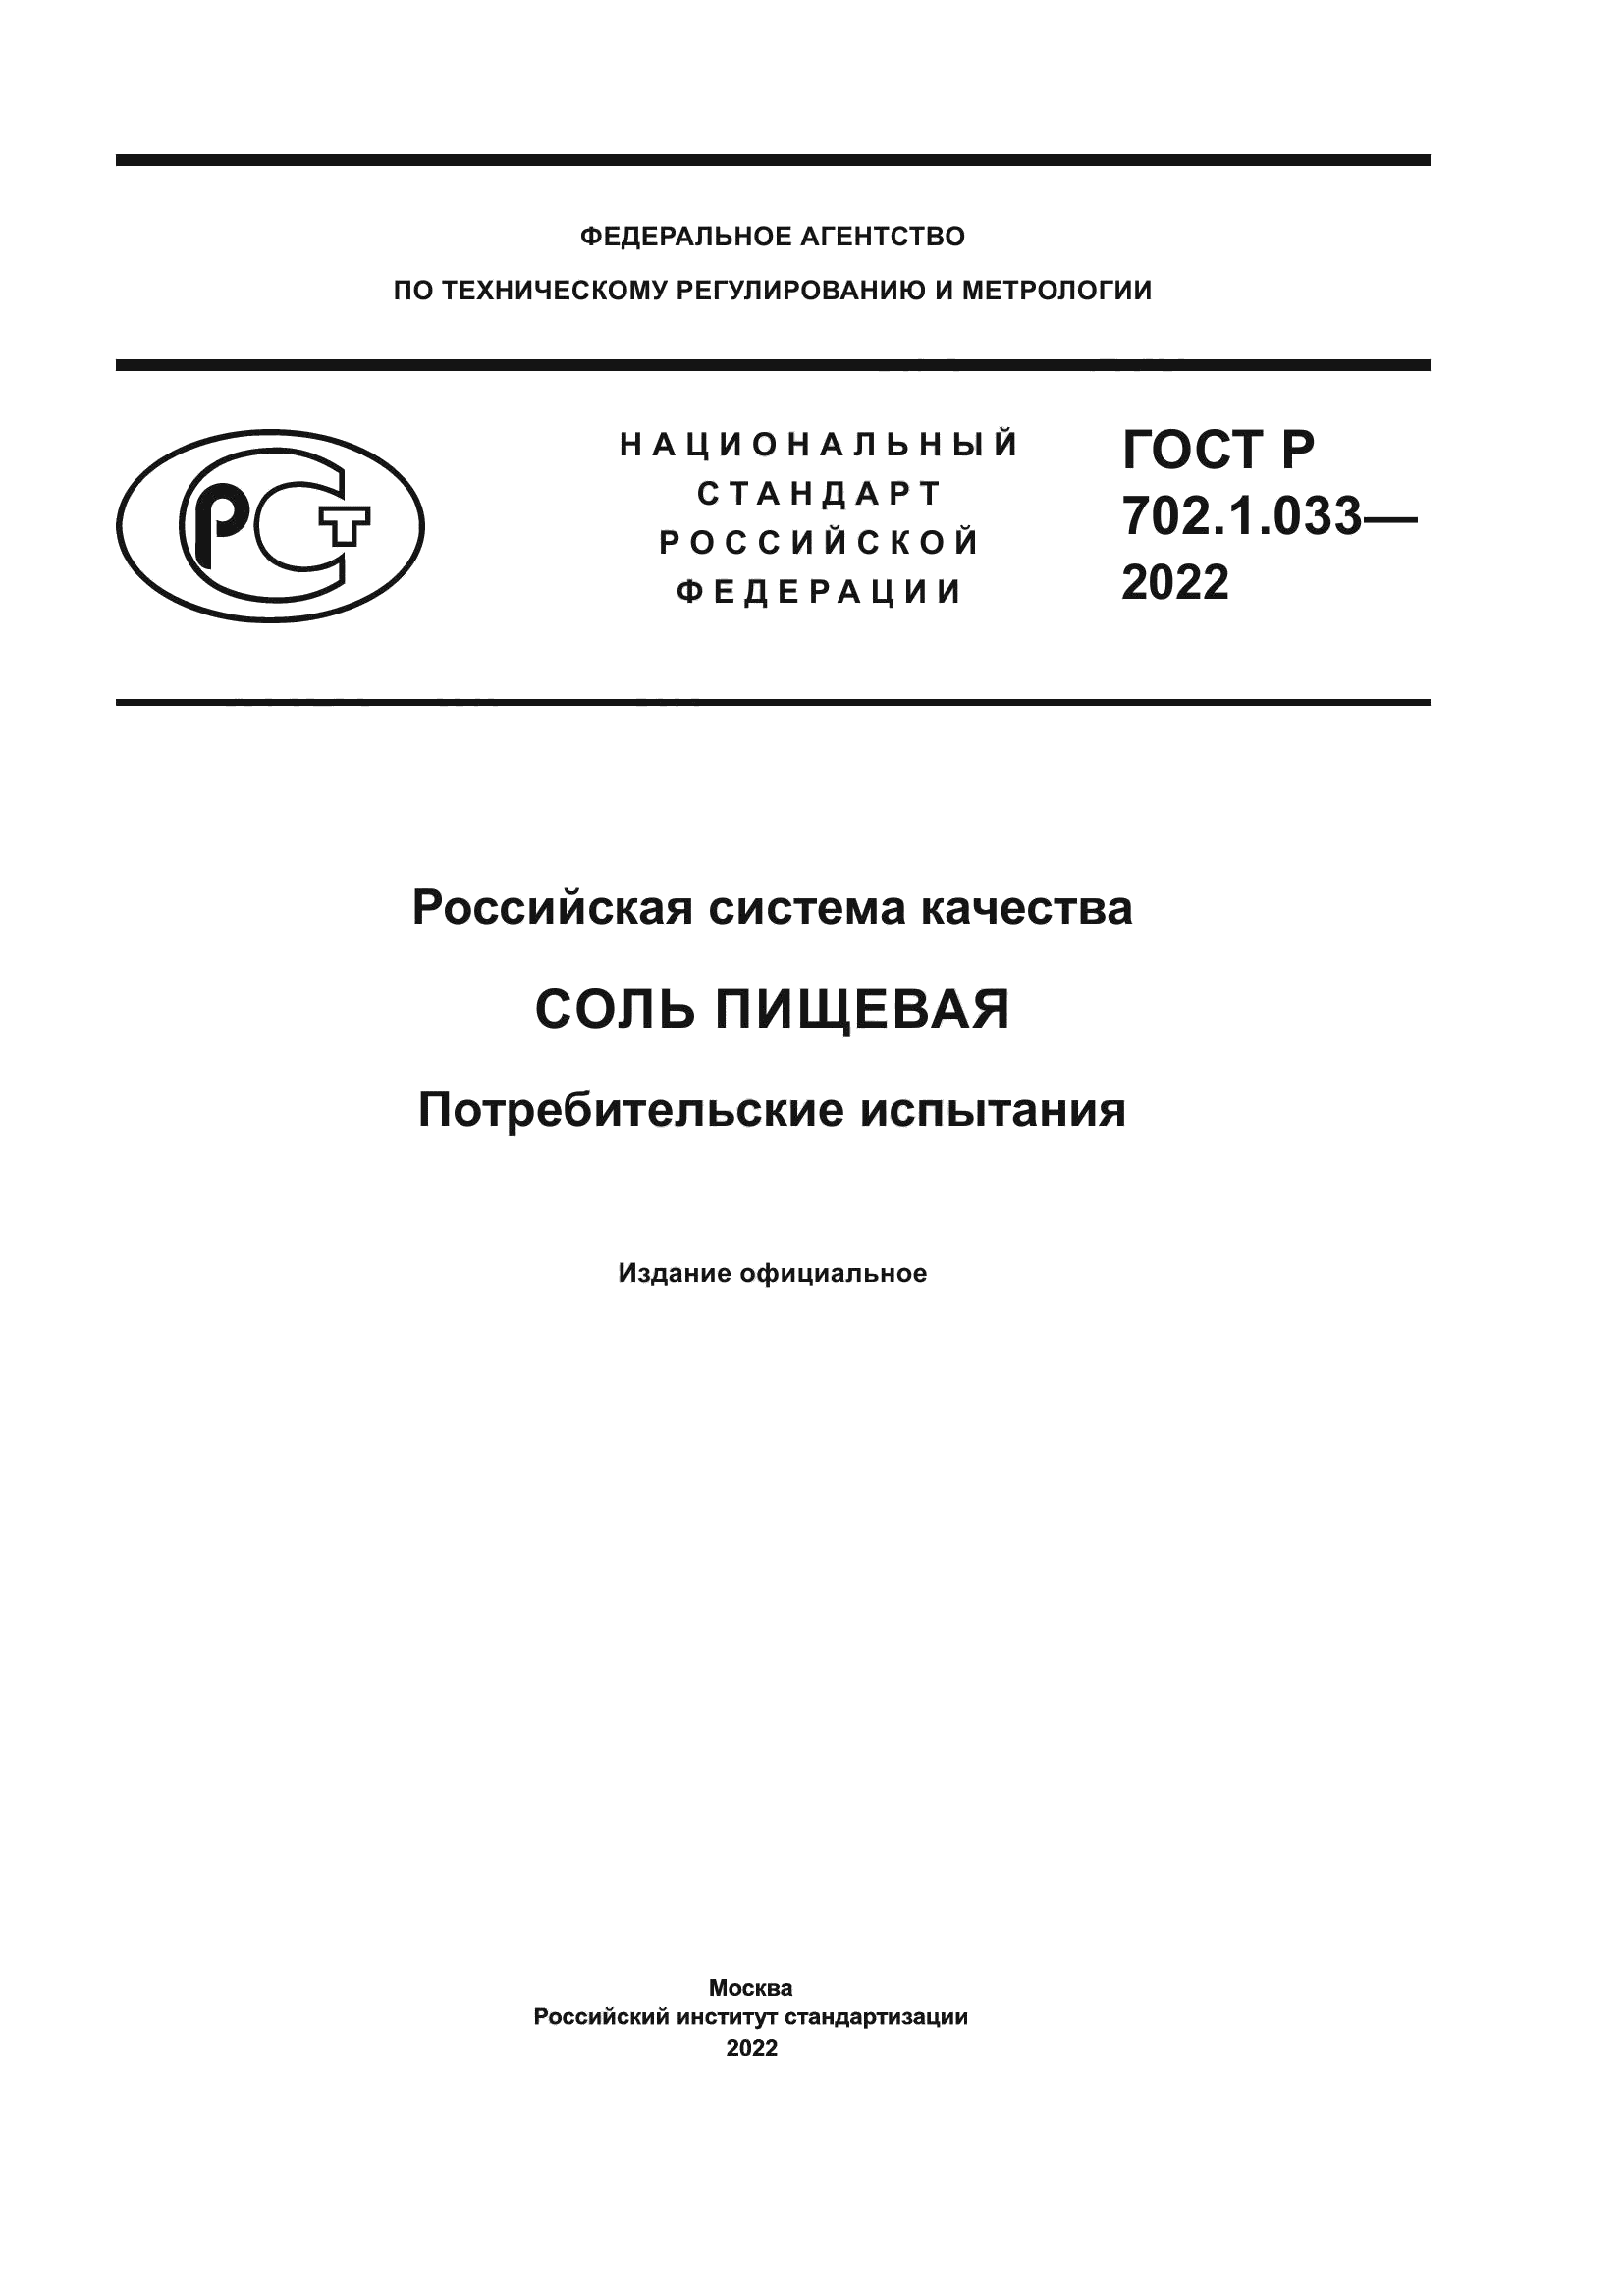 ГОСТ Р 702.1.033-2022